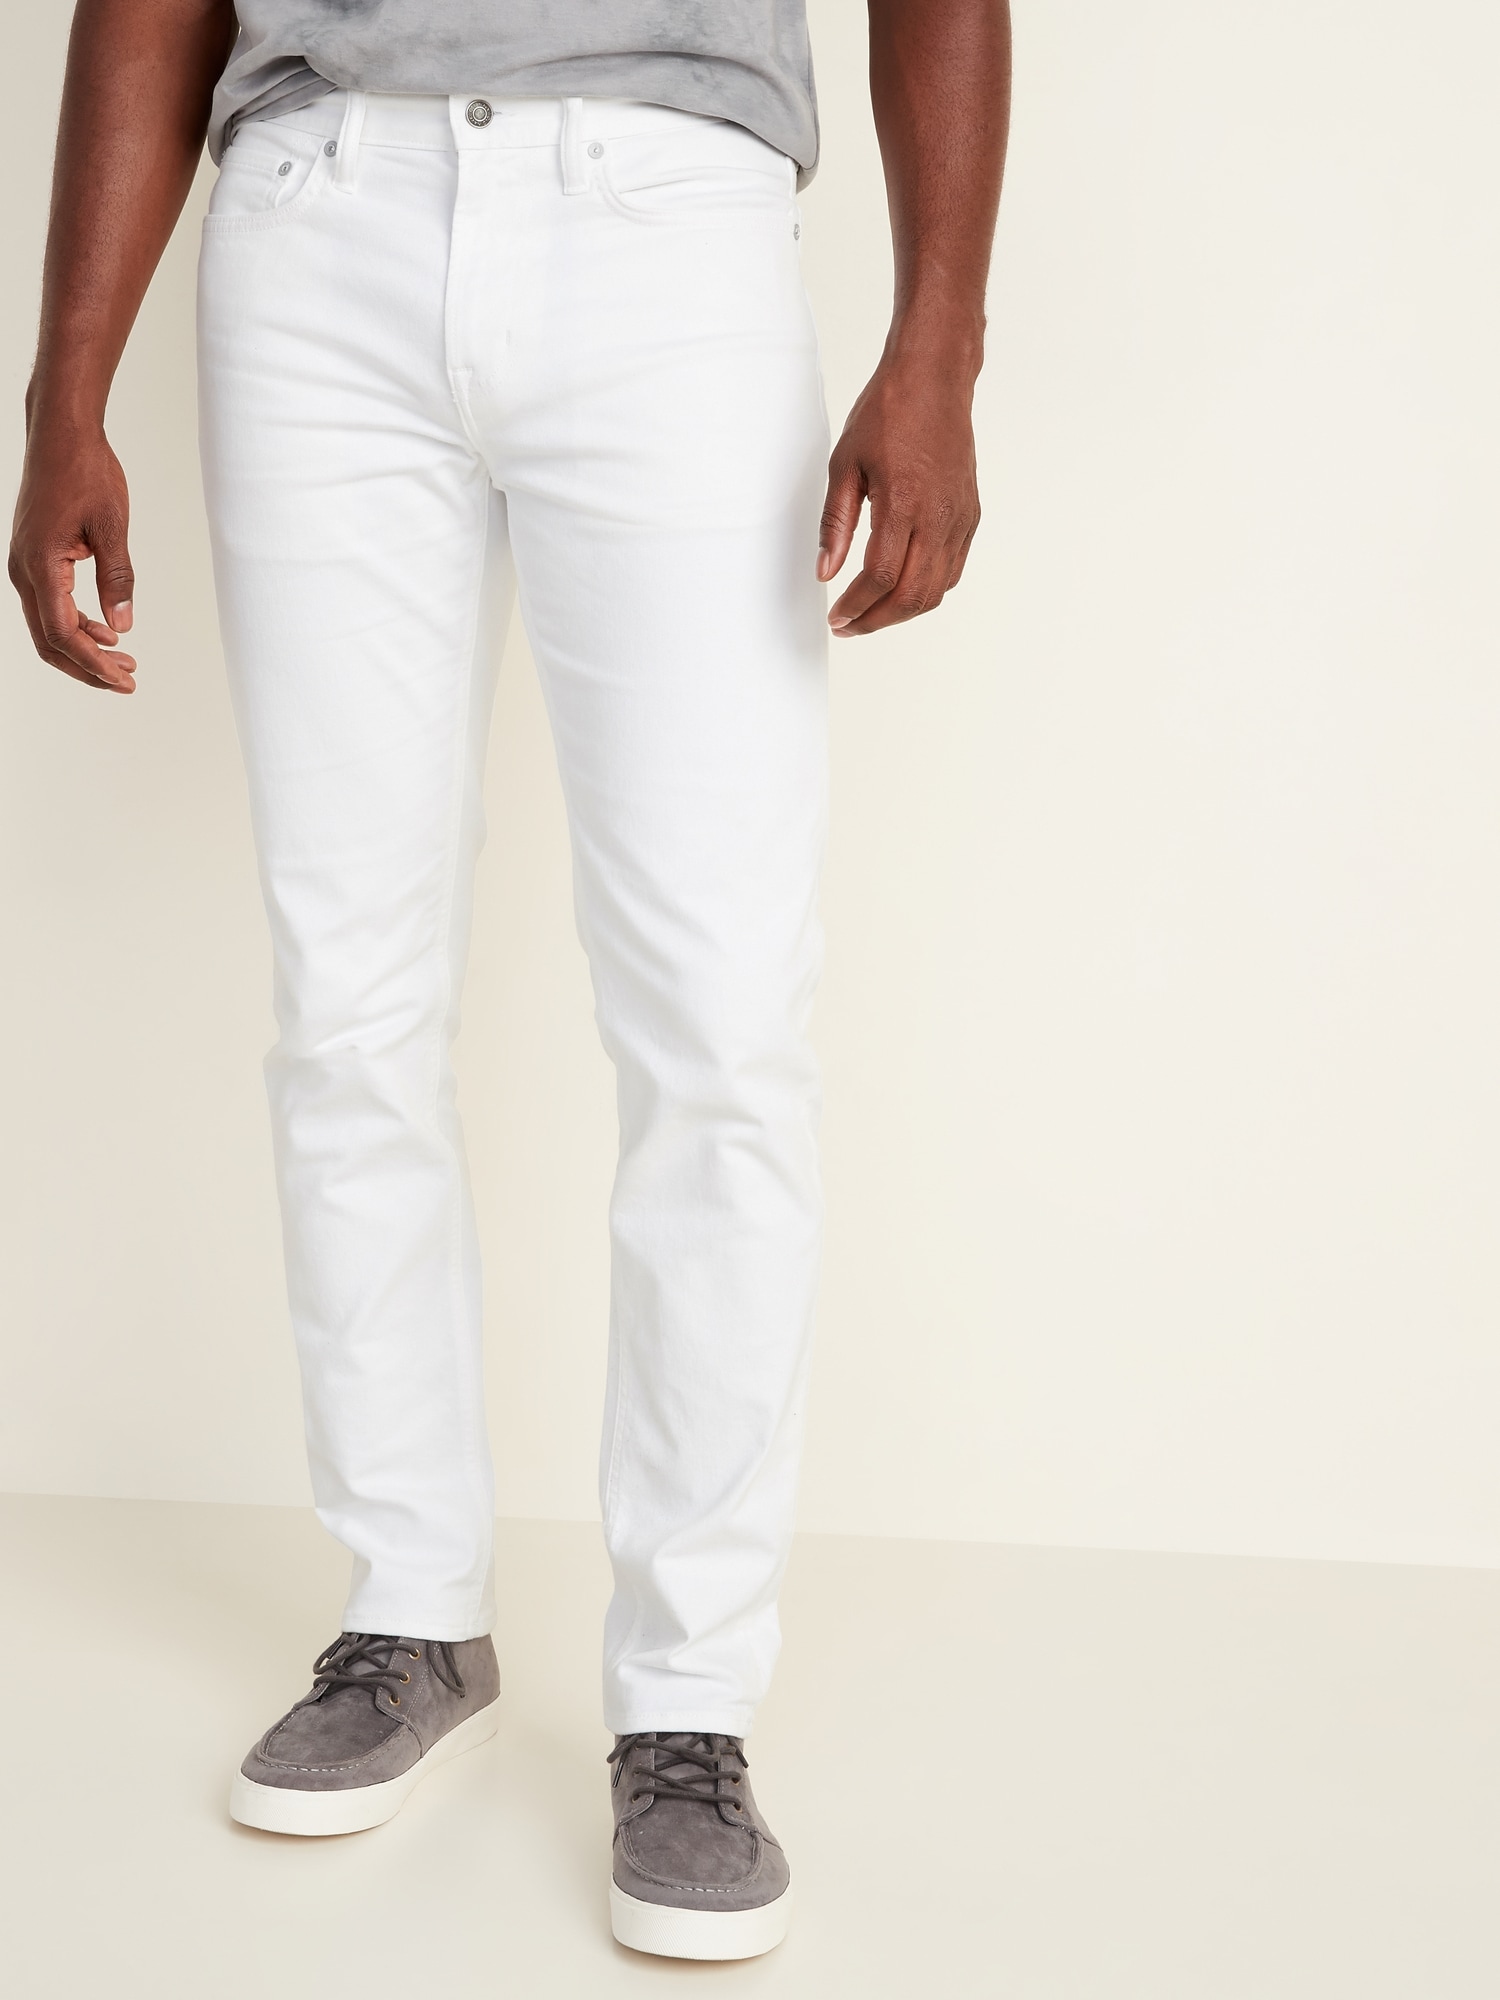 grey white jeans